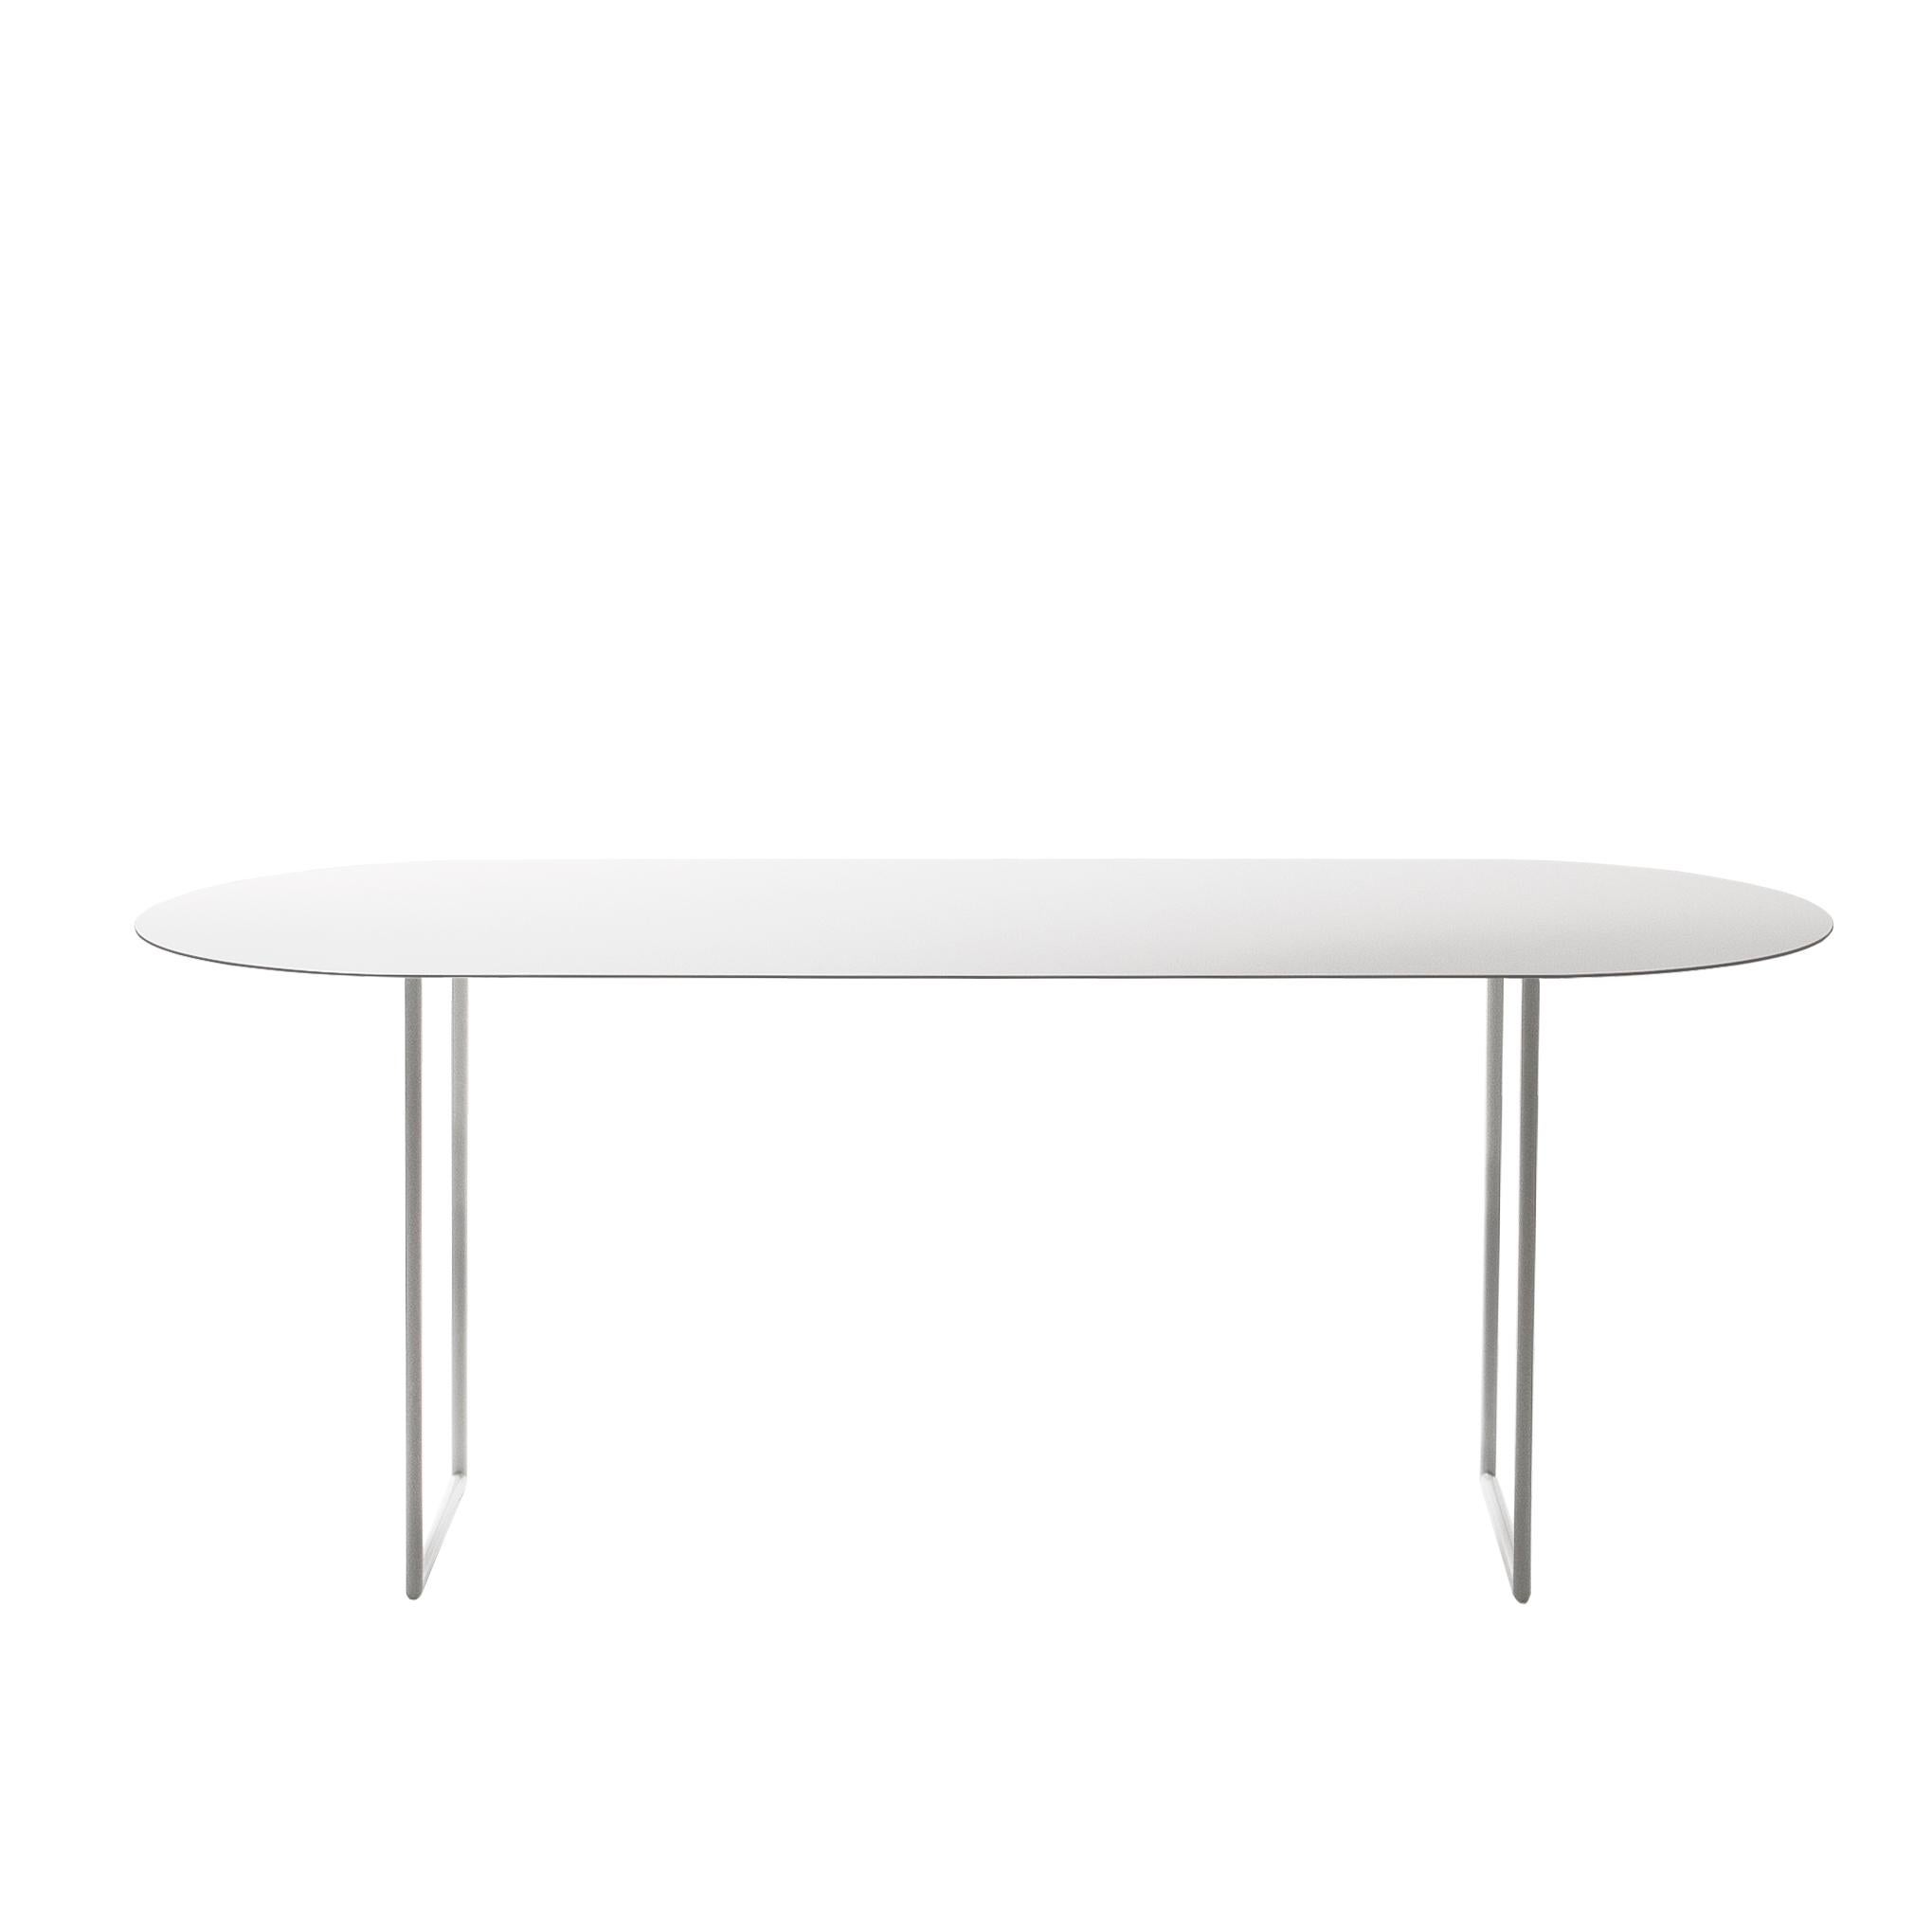 Minimalist Ultra modern minimalist dining room table studio table in white steel ultra slim For Sale